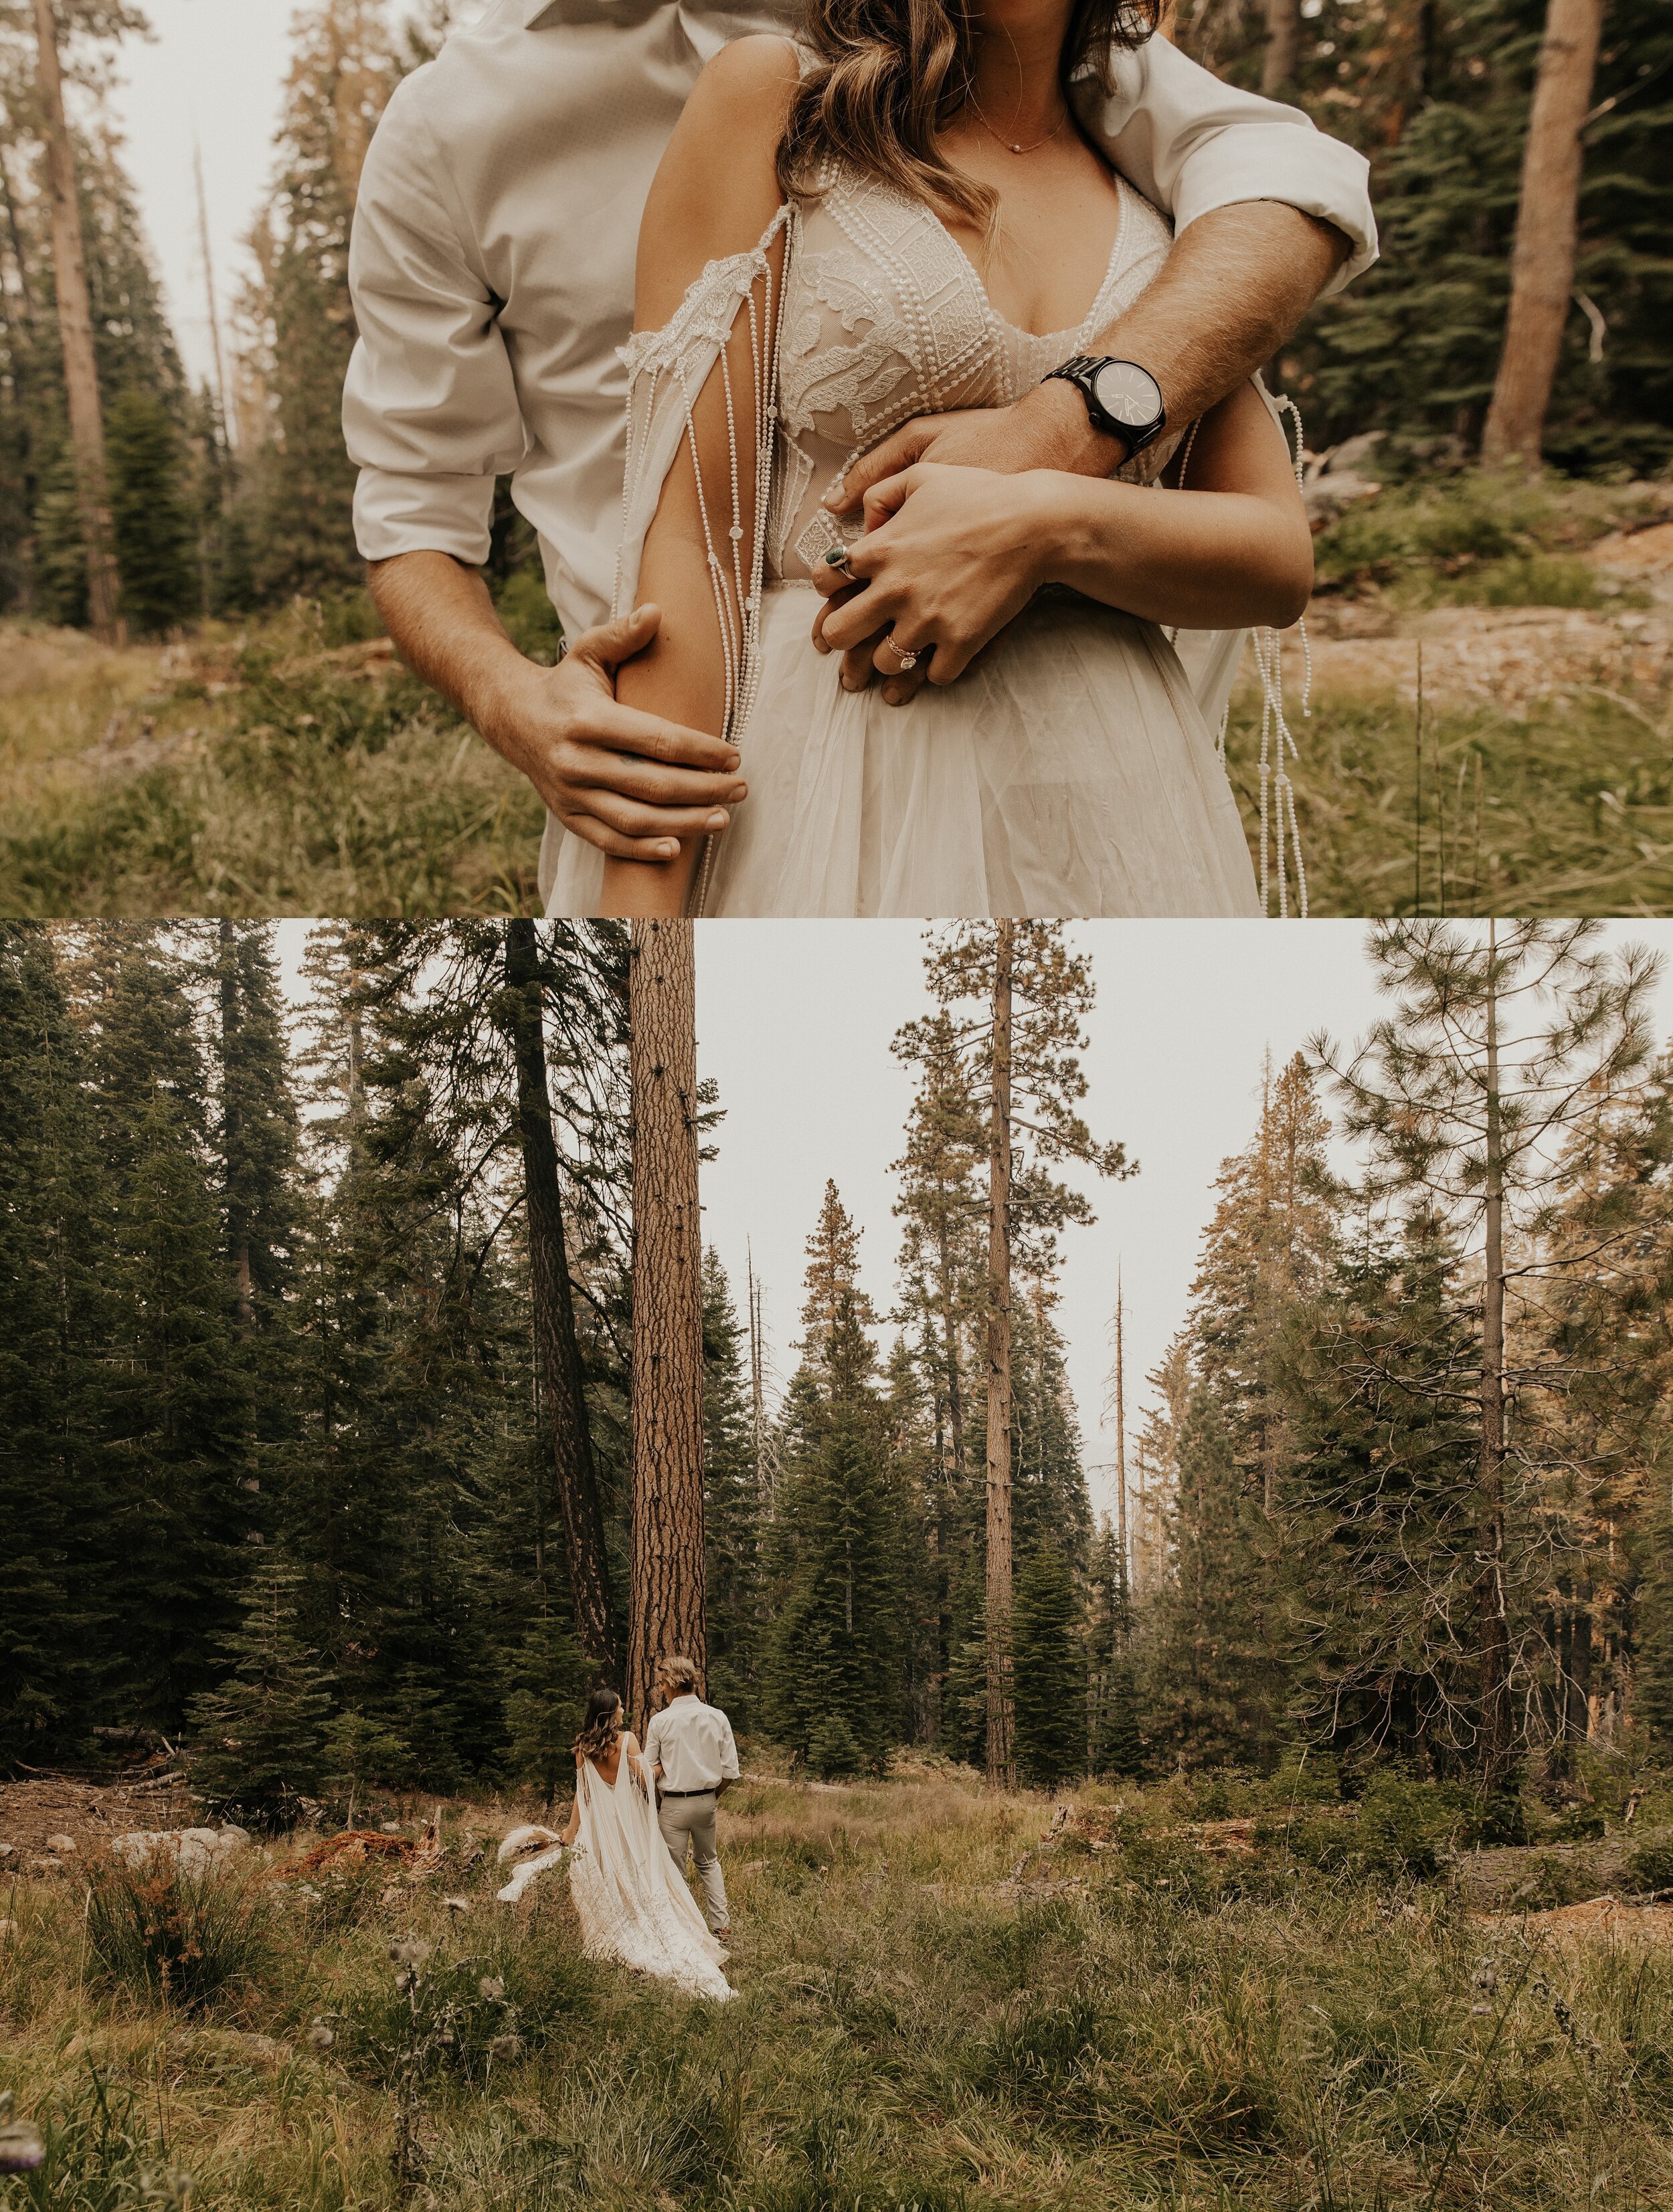 jessika-christine-photography-yosemite-couples-outdoor-adventurous-session (2).jpg